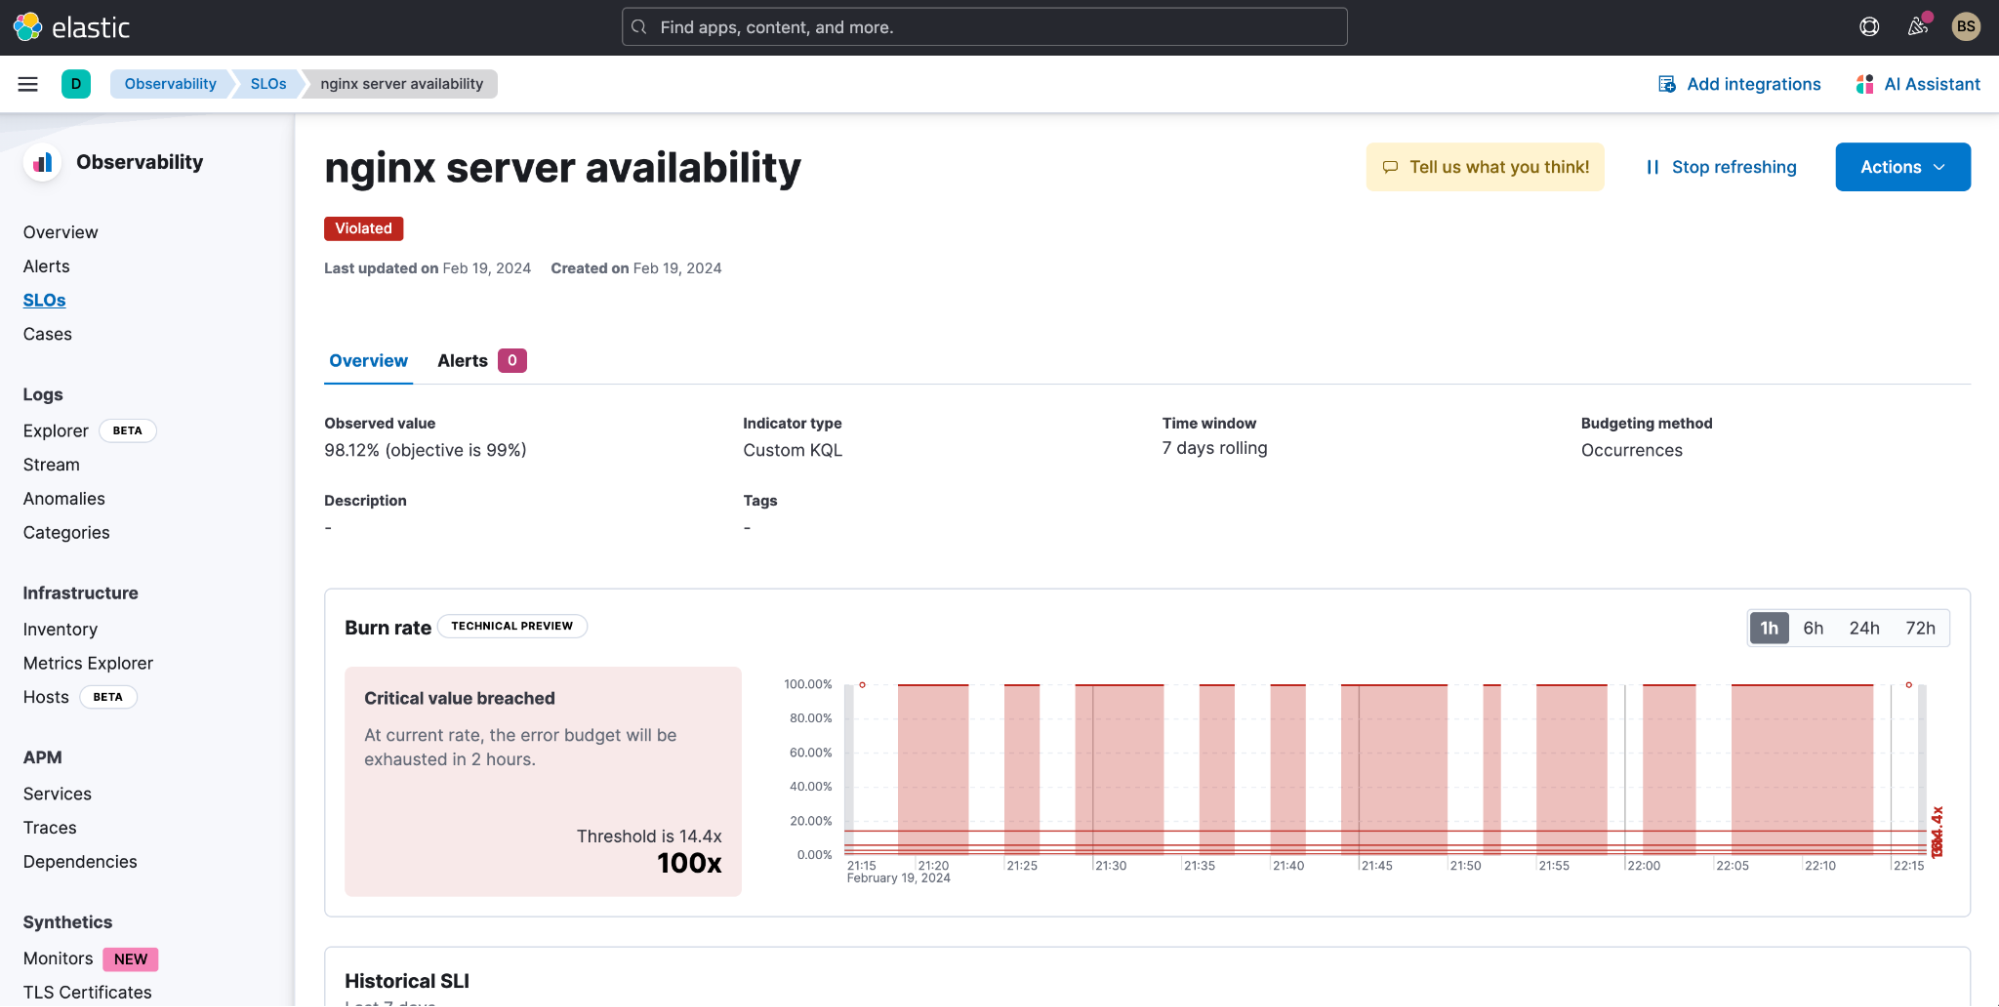 nginx server availability 